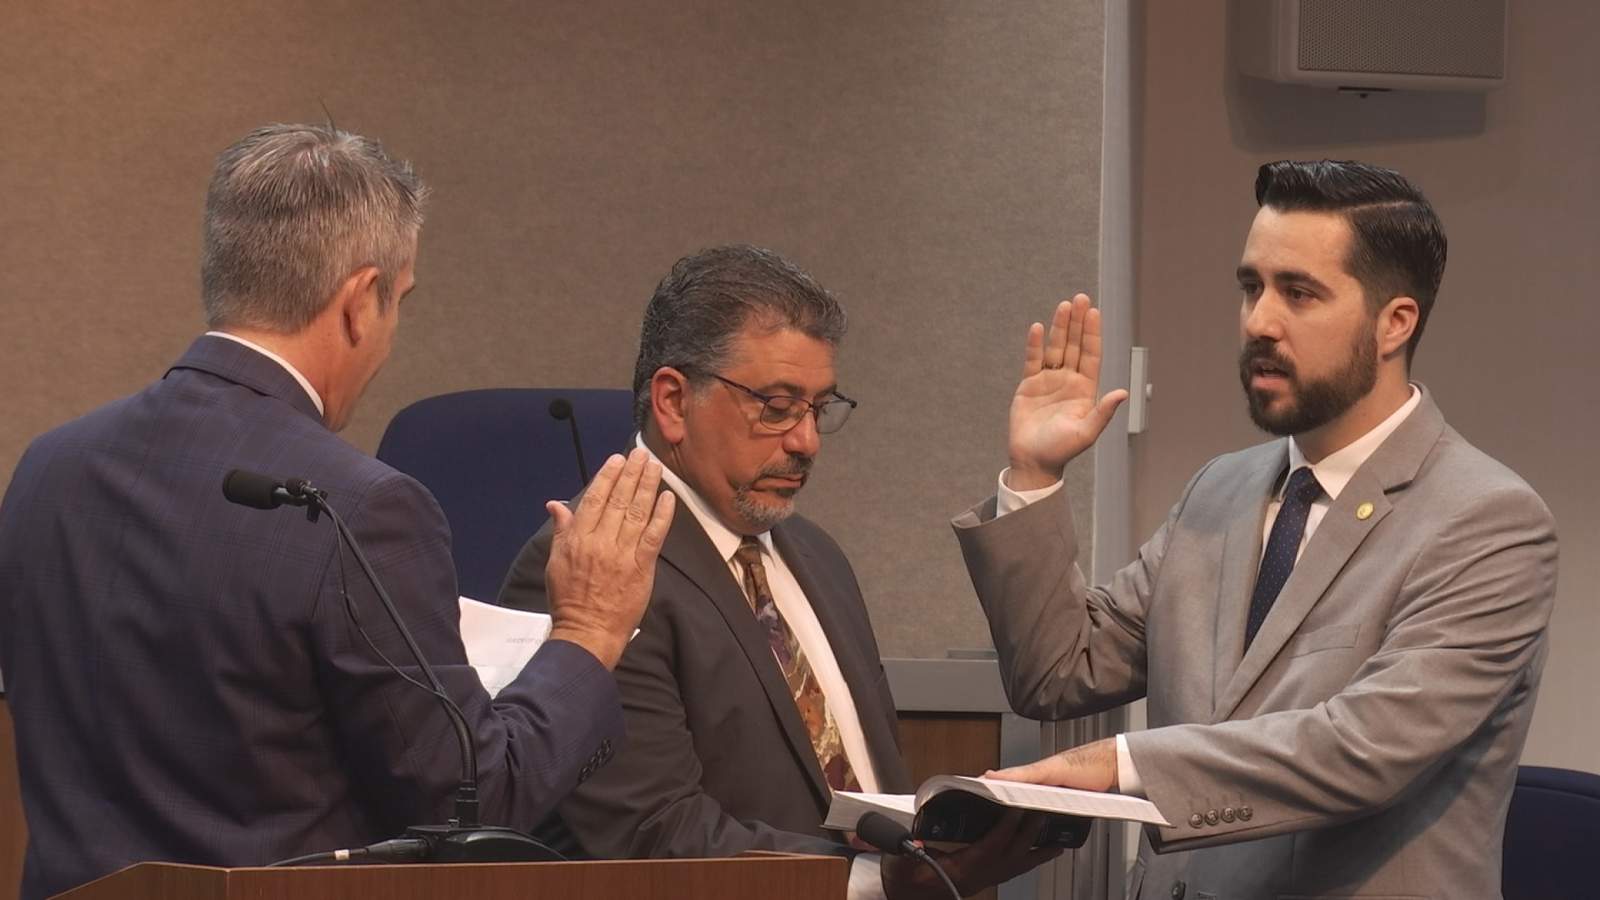 Lynchburg swears in new city council members